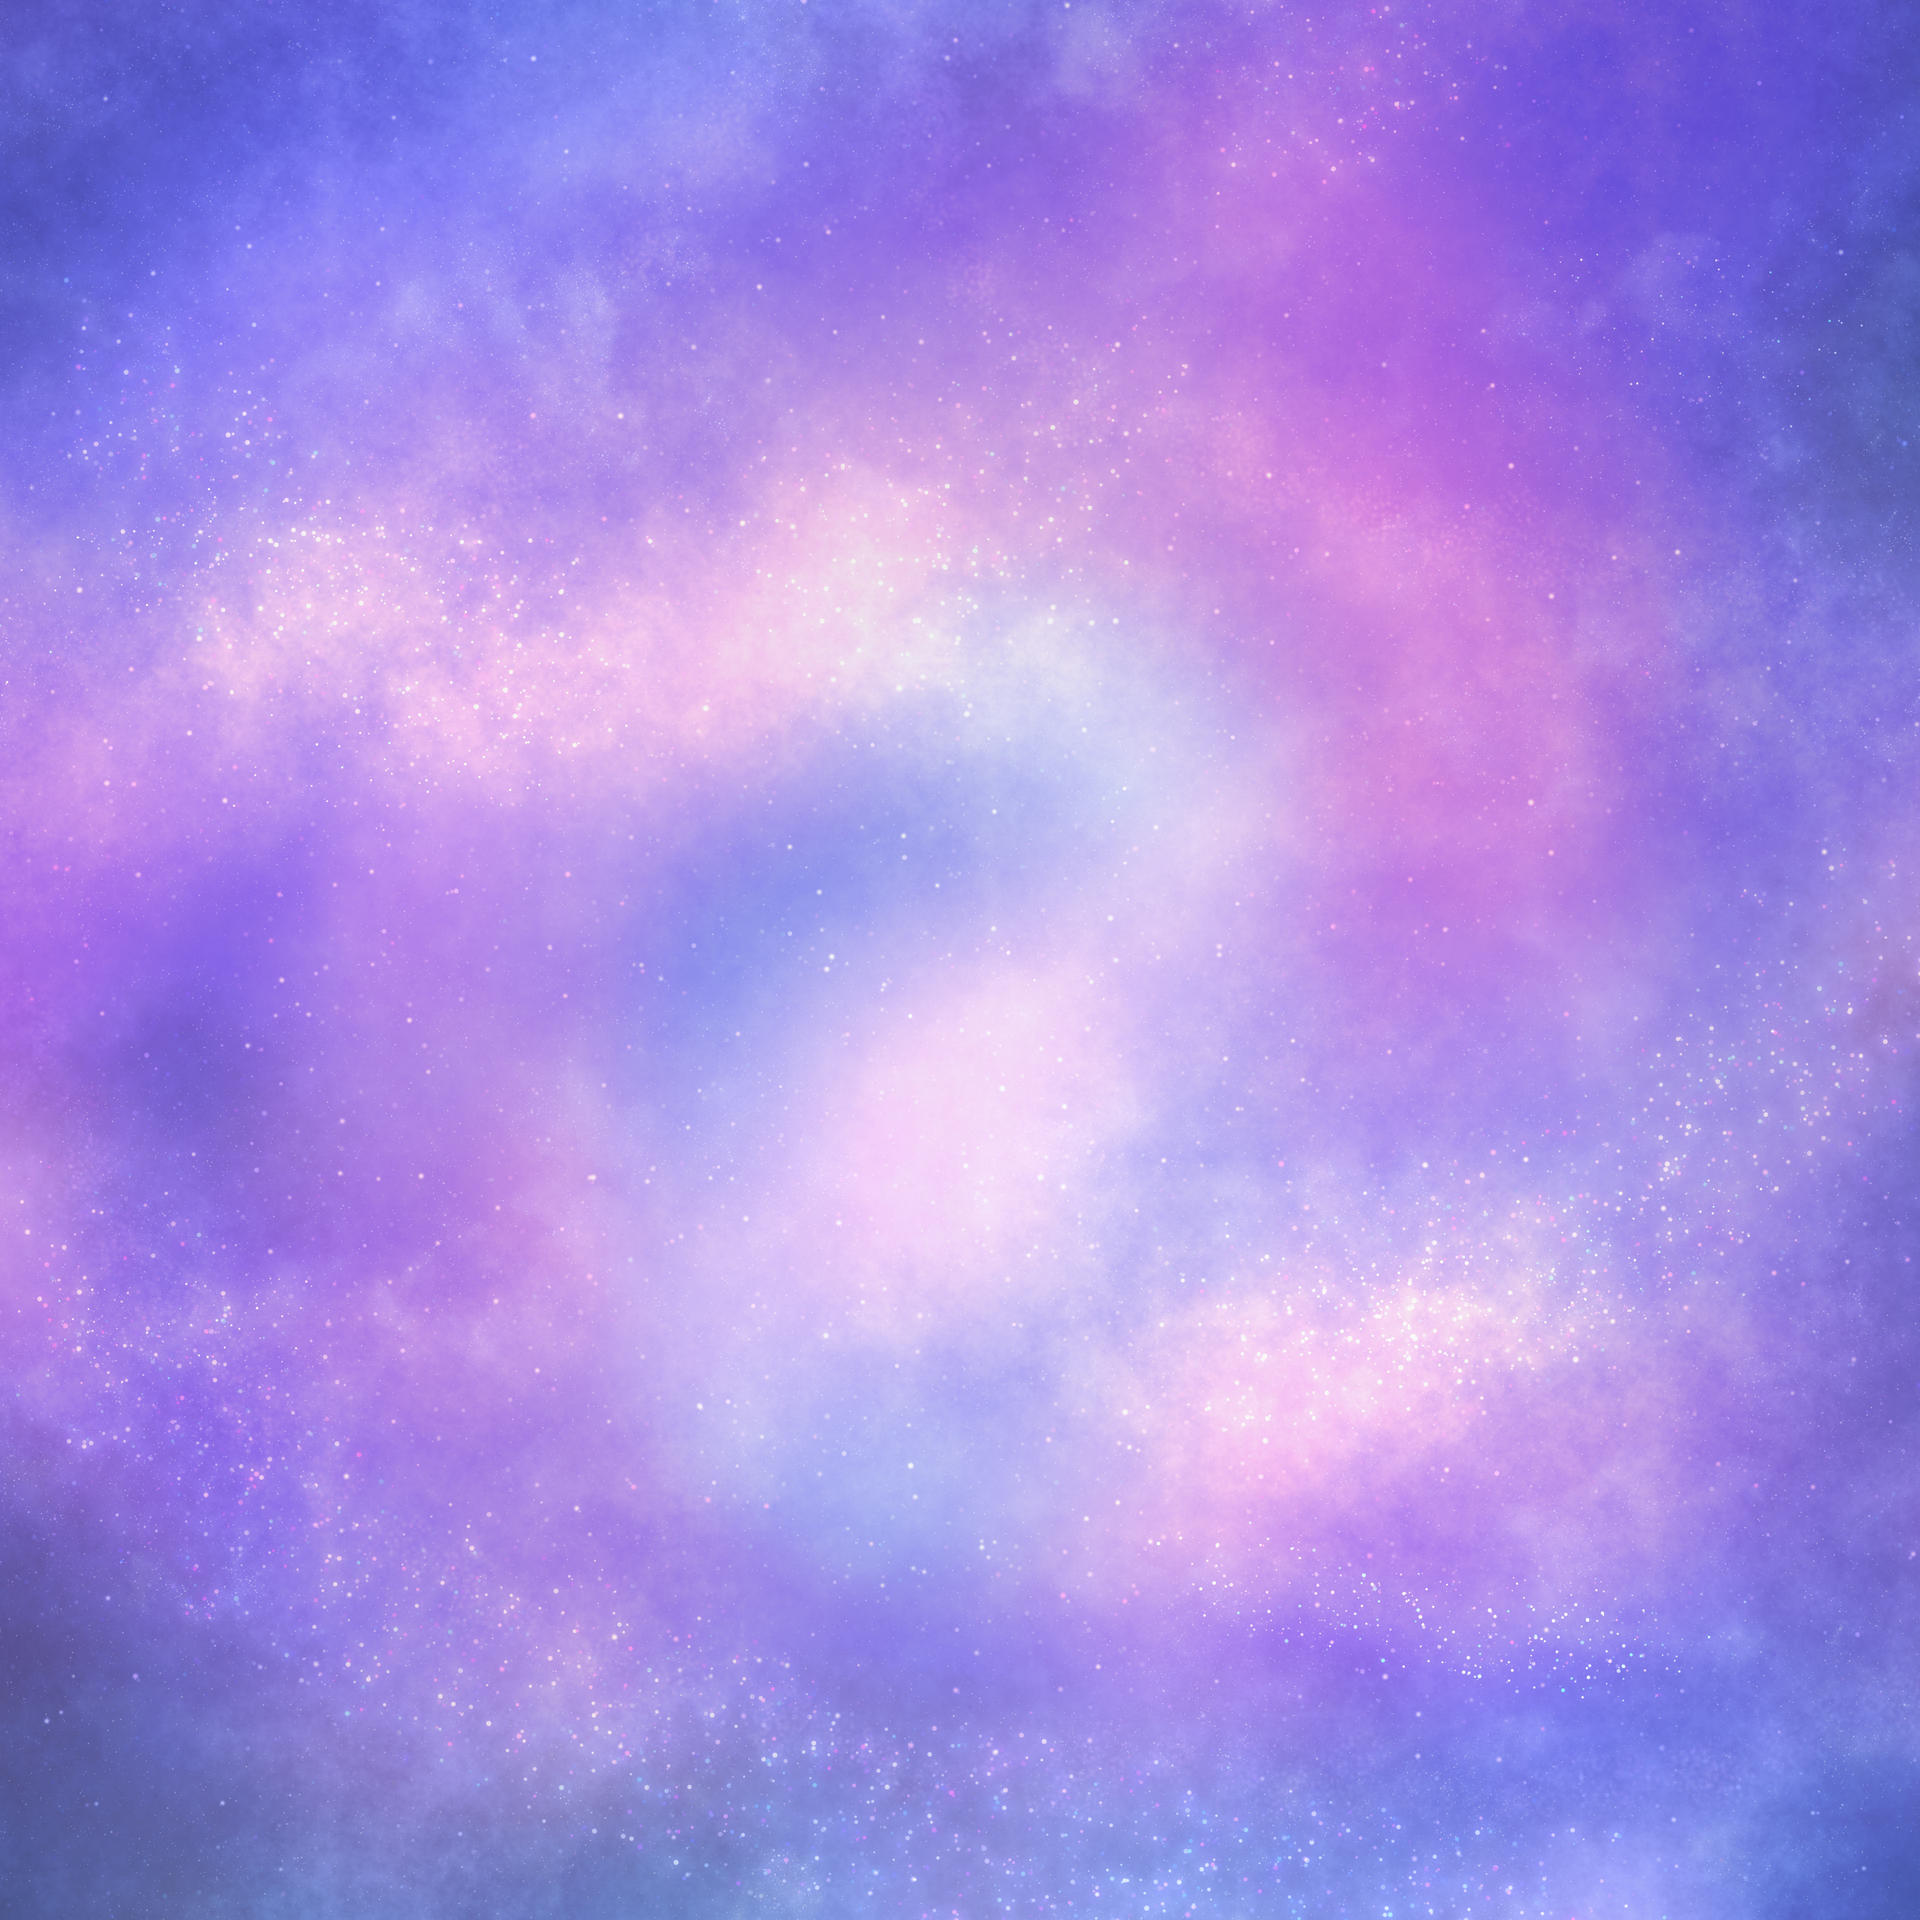 Purple Galaxy Art [ 1920p 1:1 Background ] by lovelymin on DeviantArt